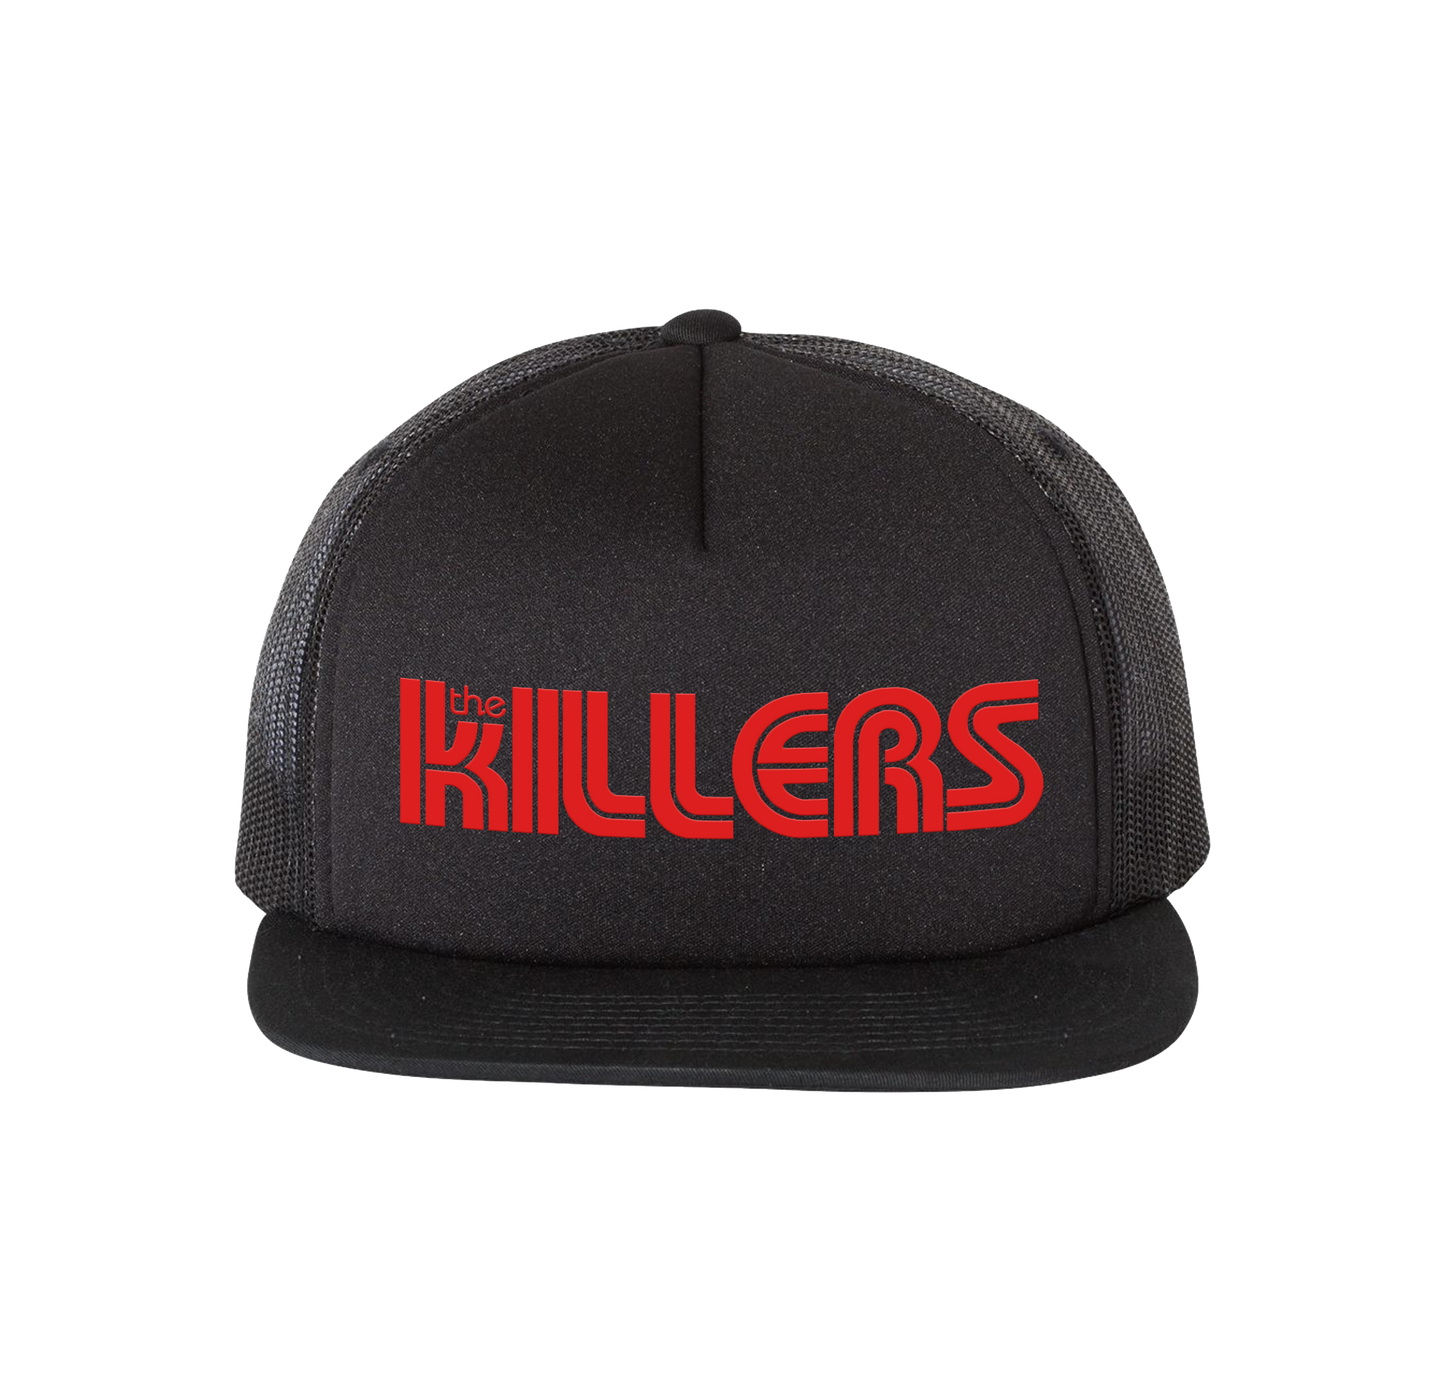 THE KILLERS LOGO TRUCKER HAT